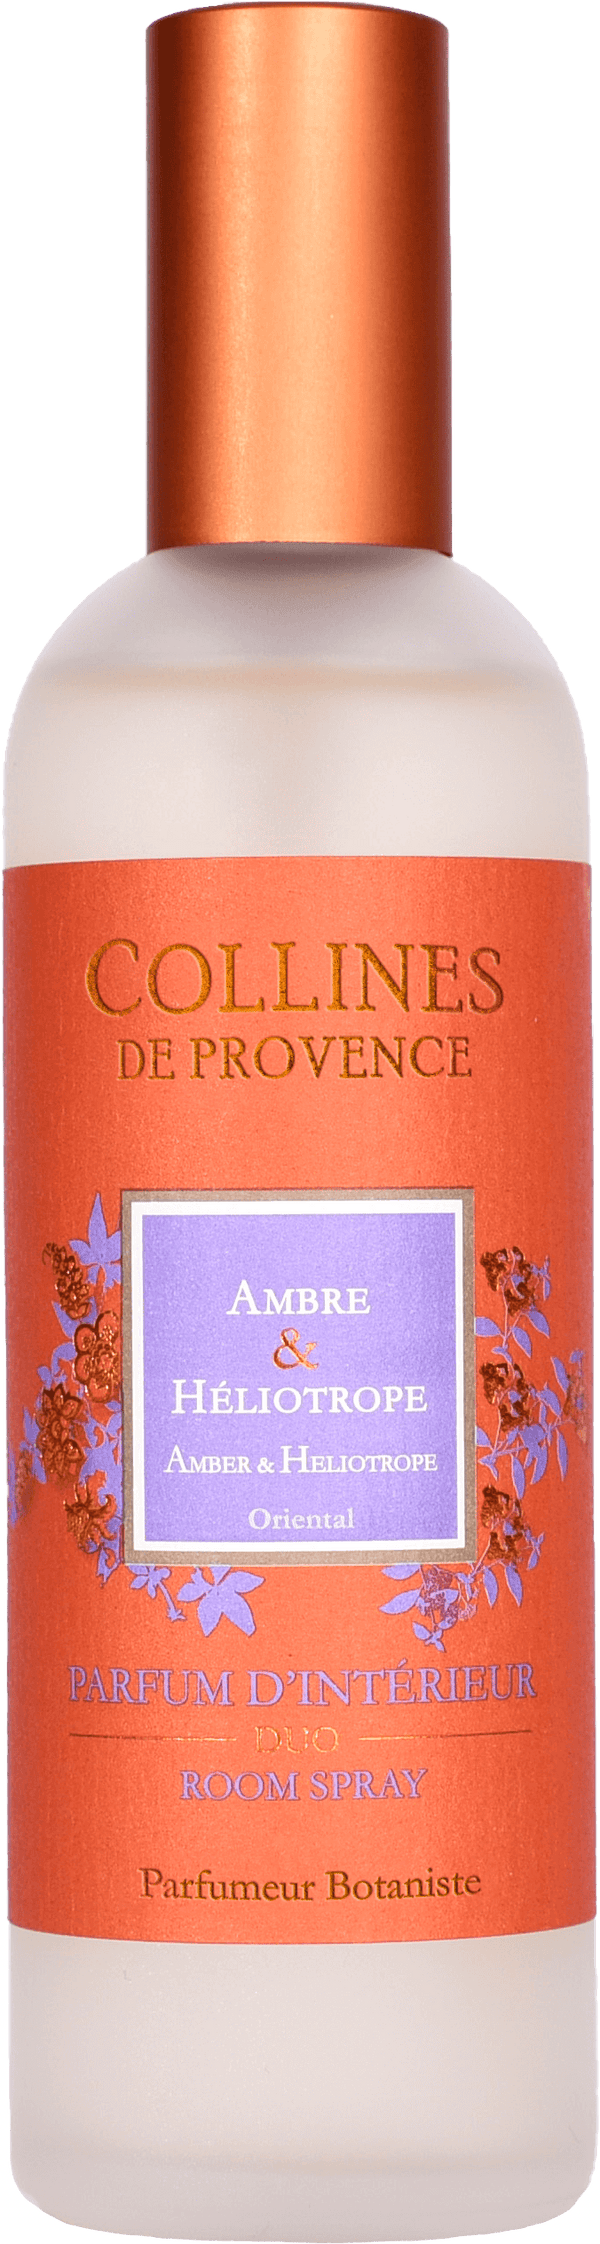 Raumspray Amber & Heliotrop 100 ml - Collines de Provence